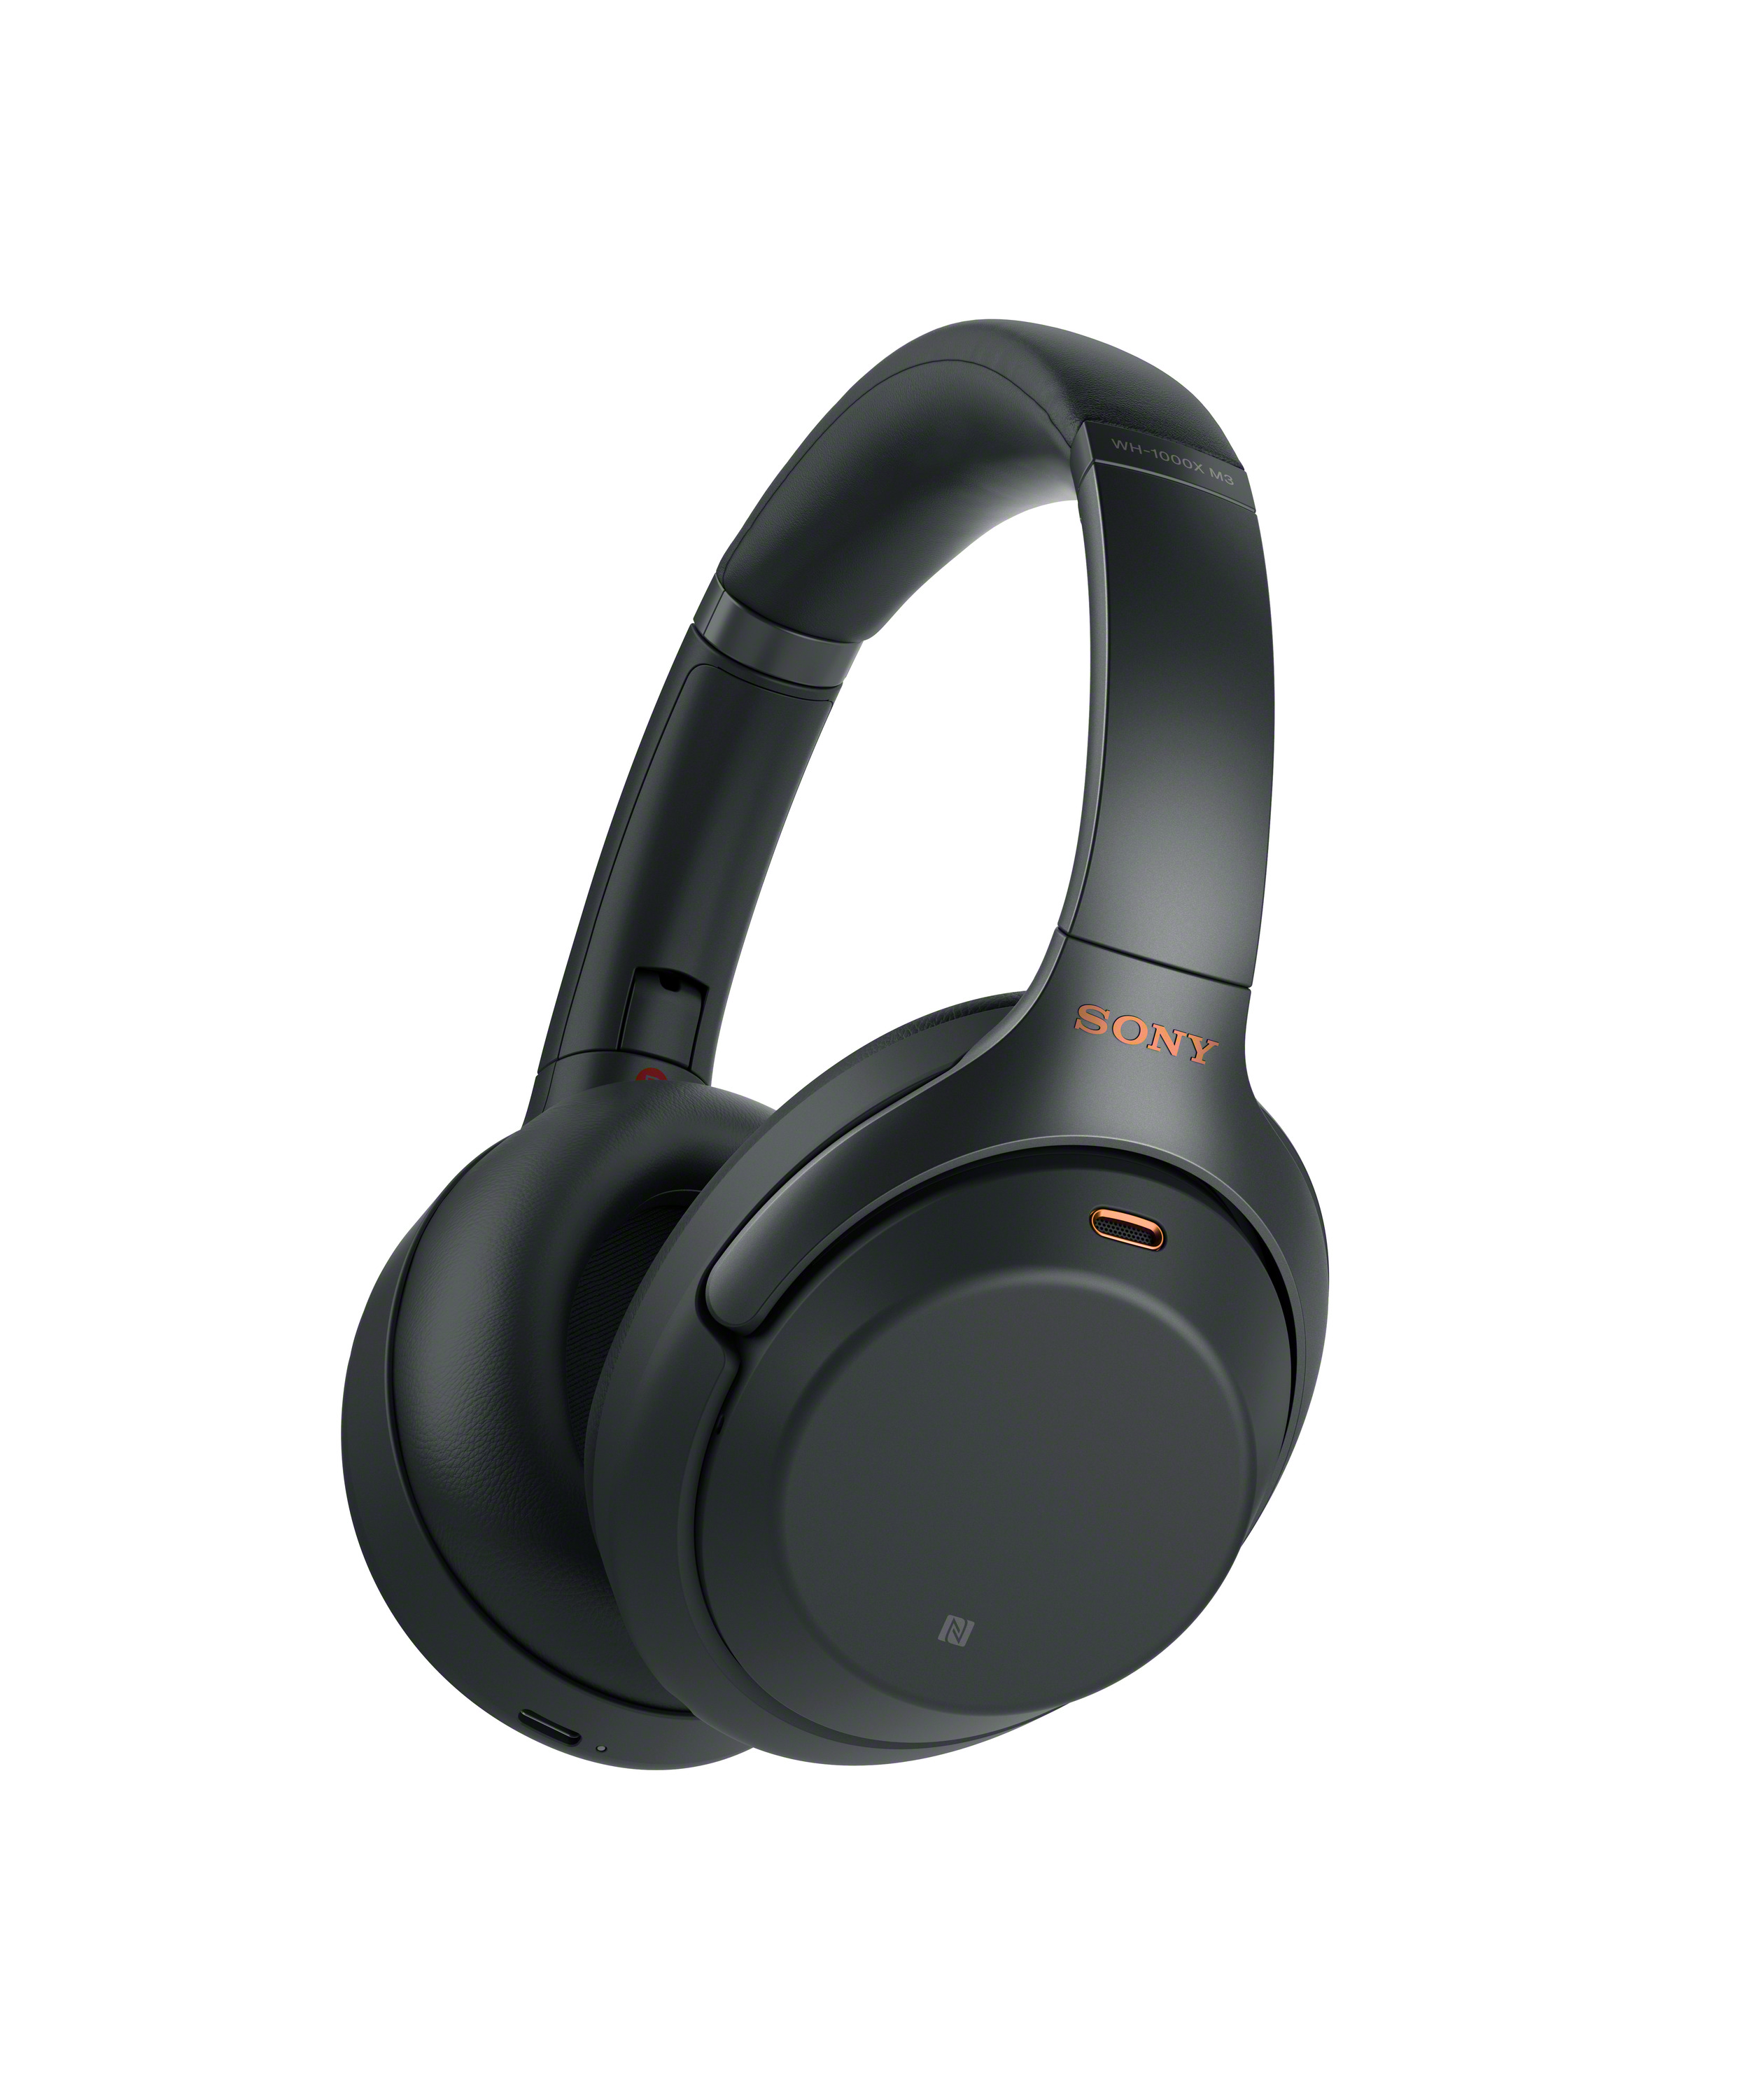 Sony Headphones - Wireless Noise Cancelling Headphones - Best Headphones for Listening to Musics